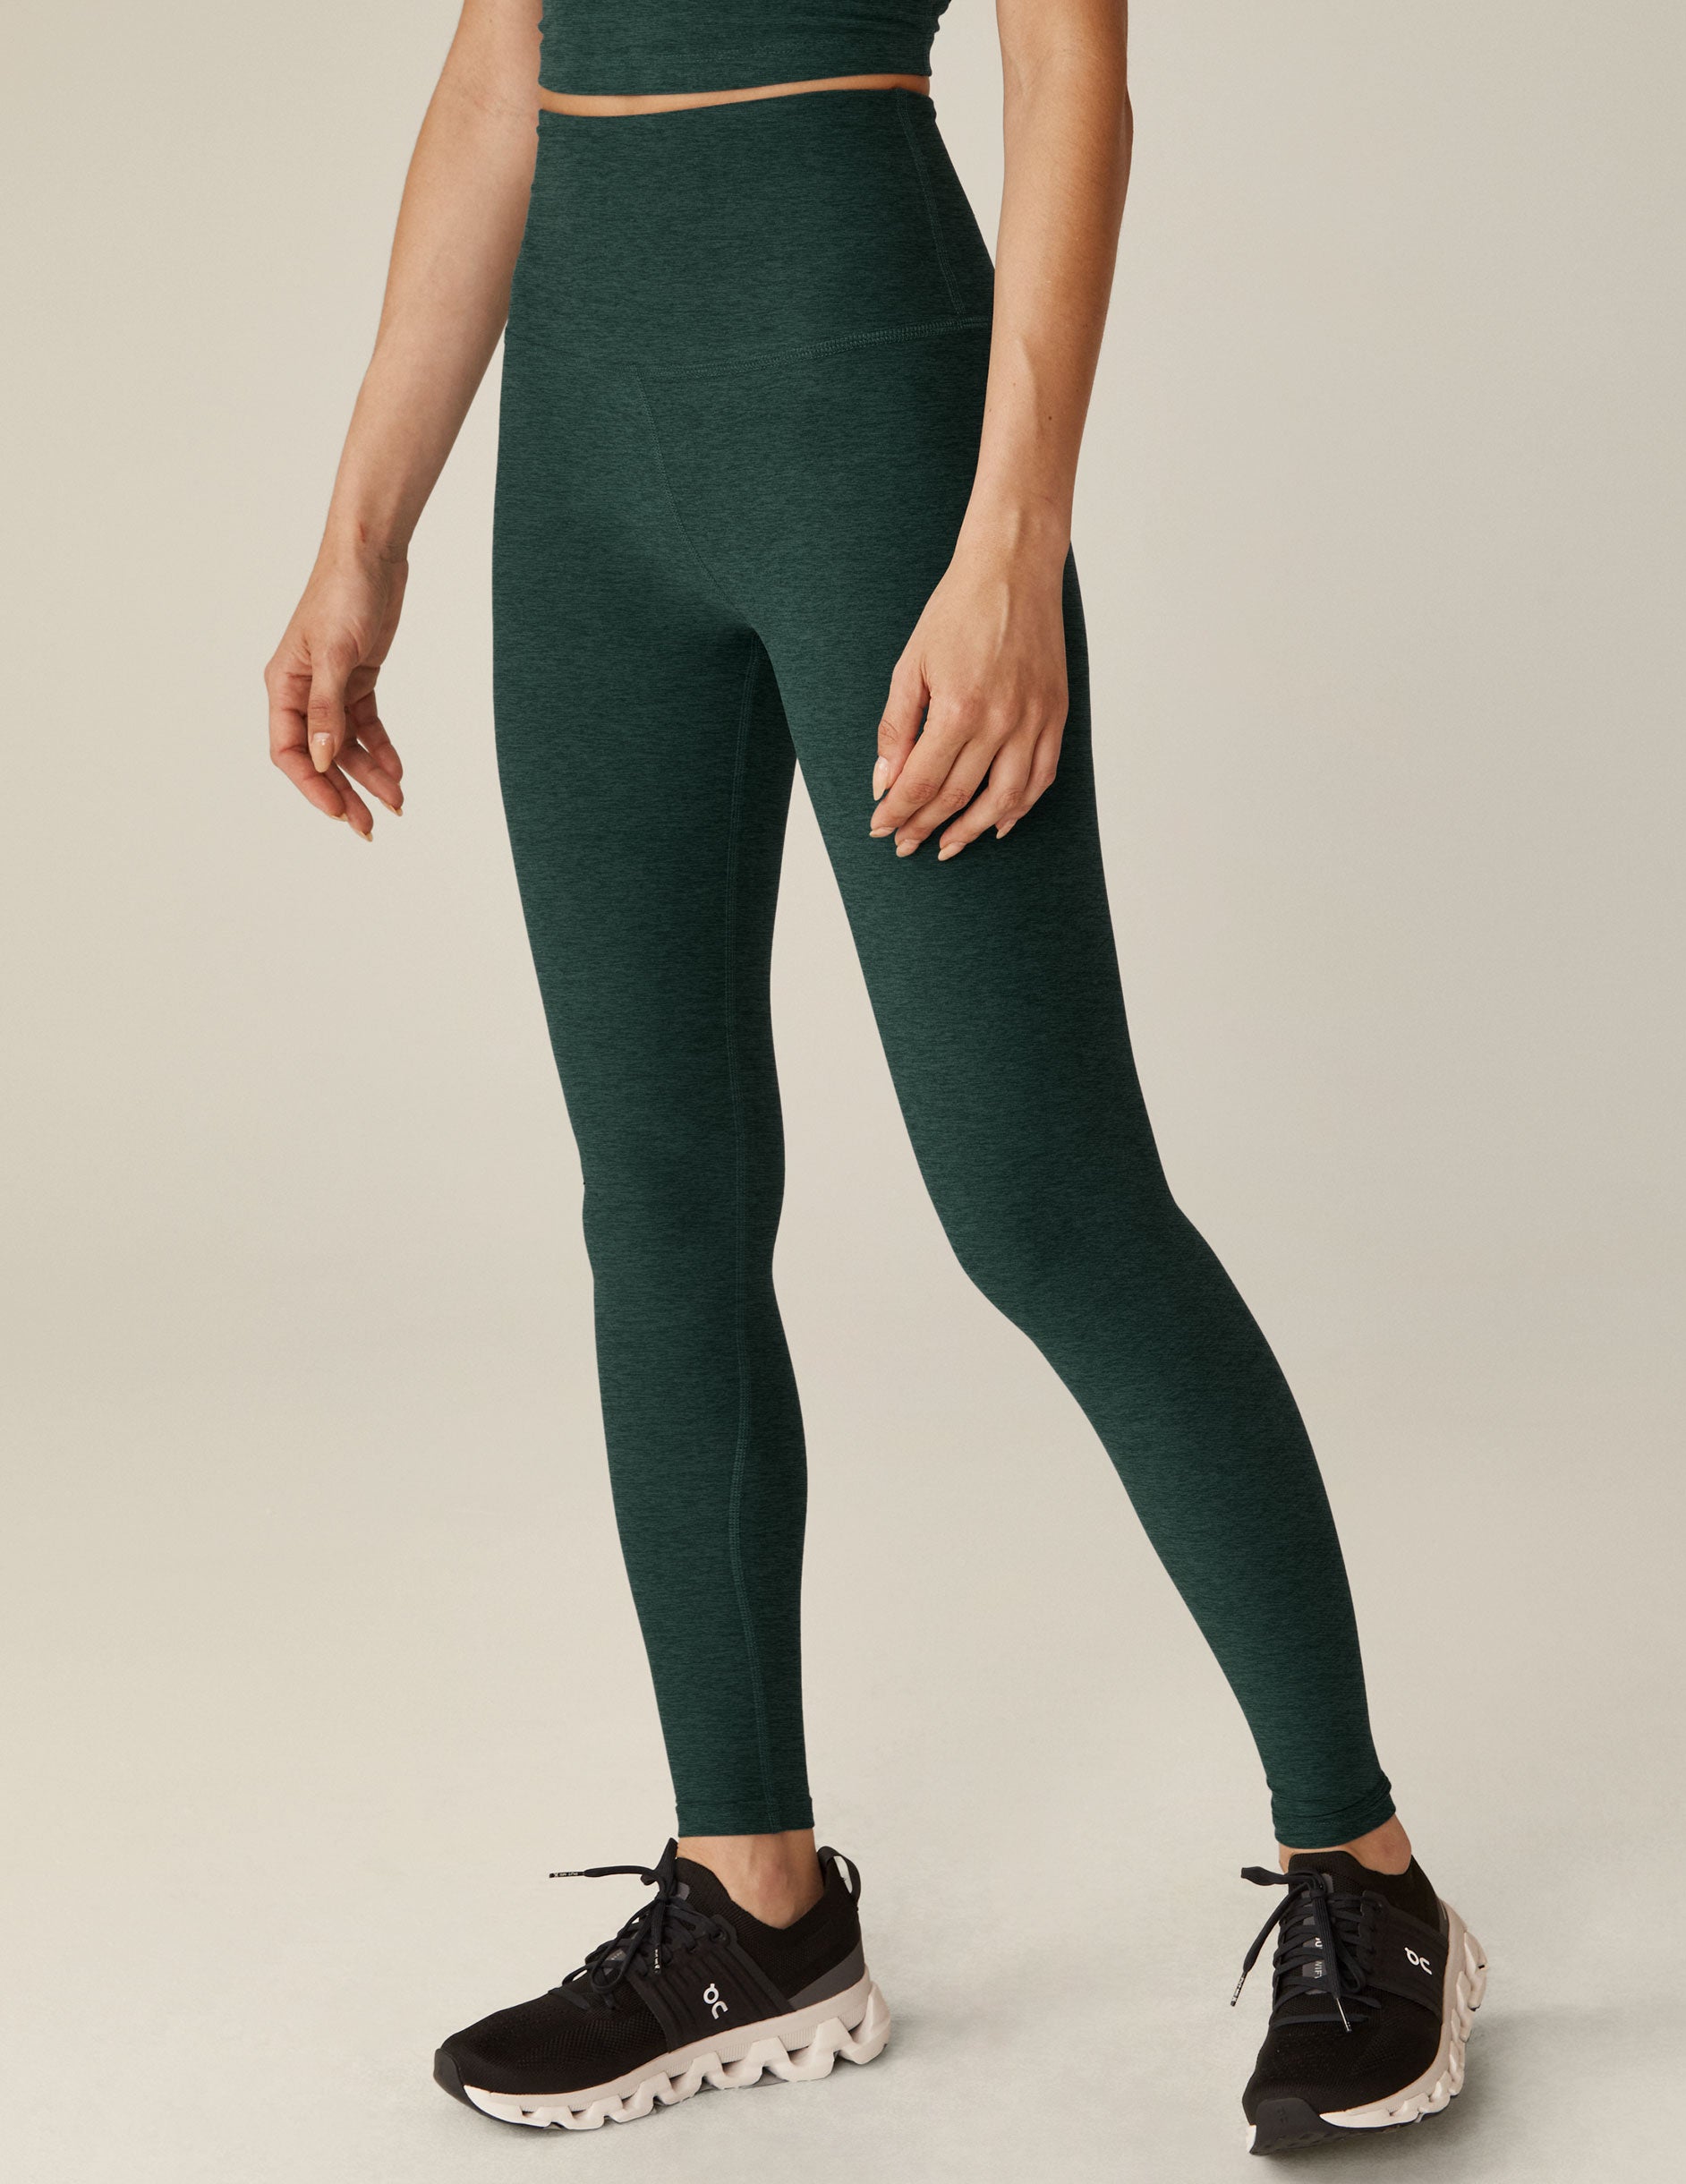 LESIES Women's Active Capri Yoga Pants with Pockets High Waist Workout  Legging